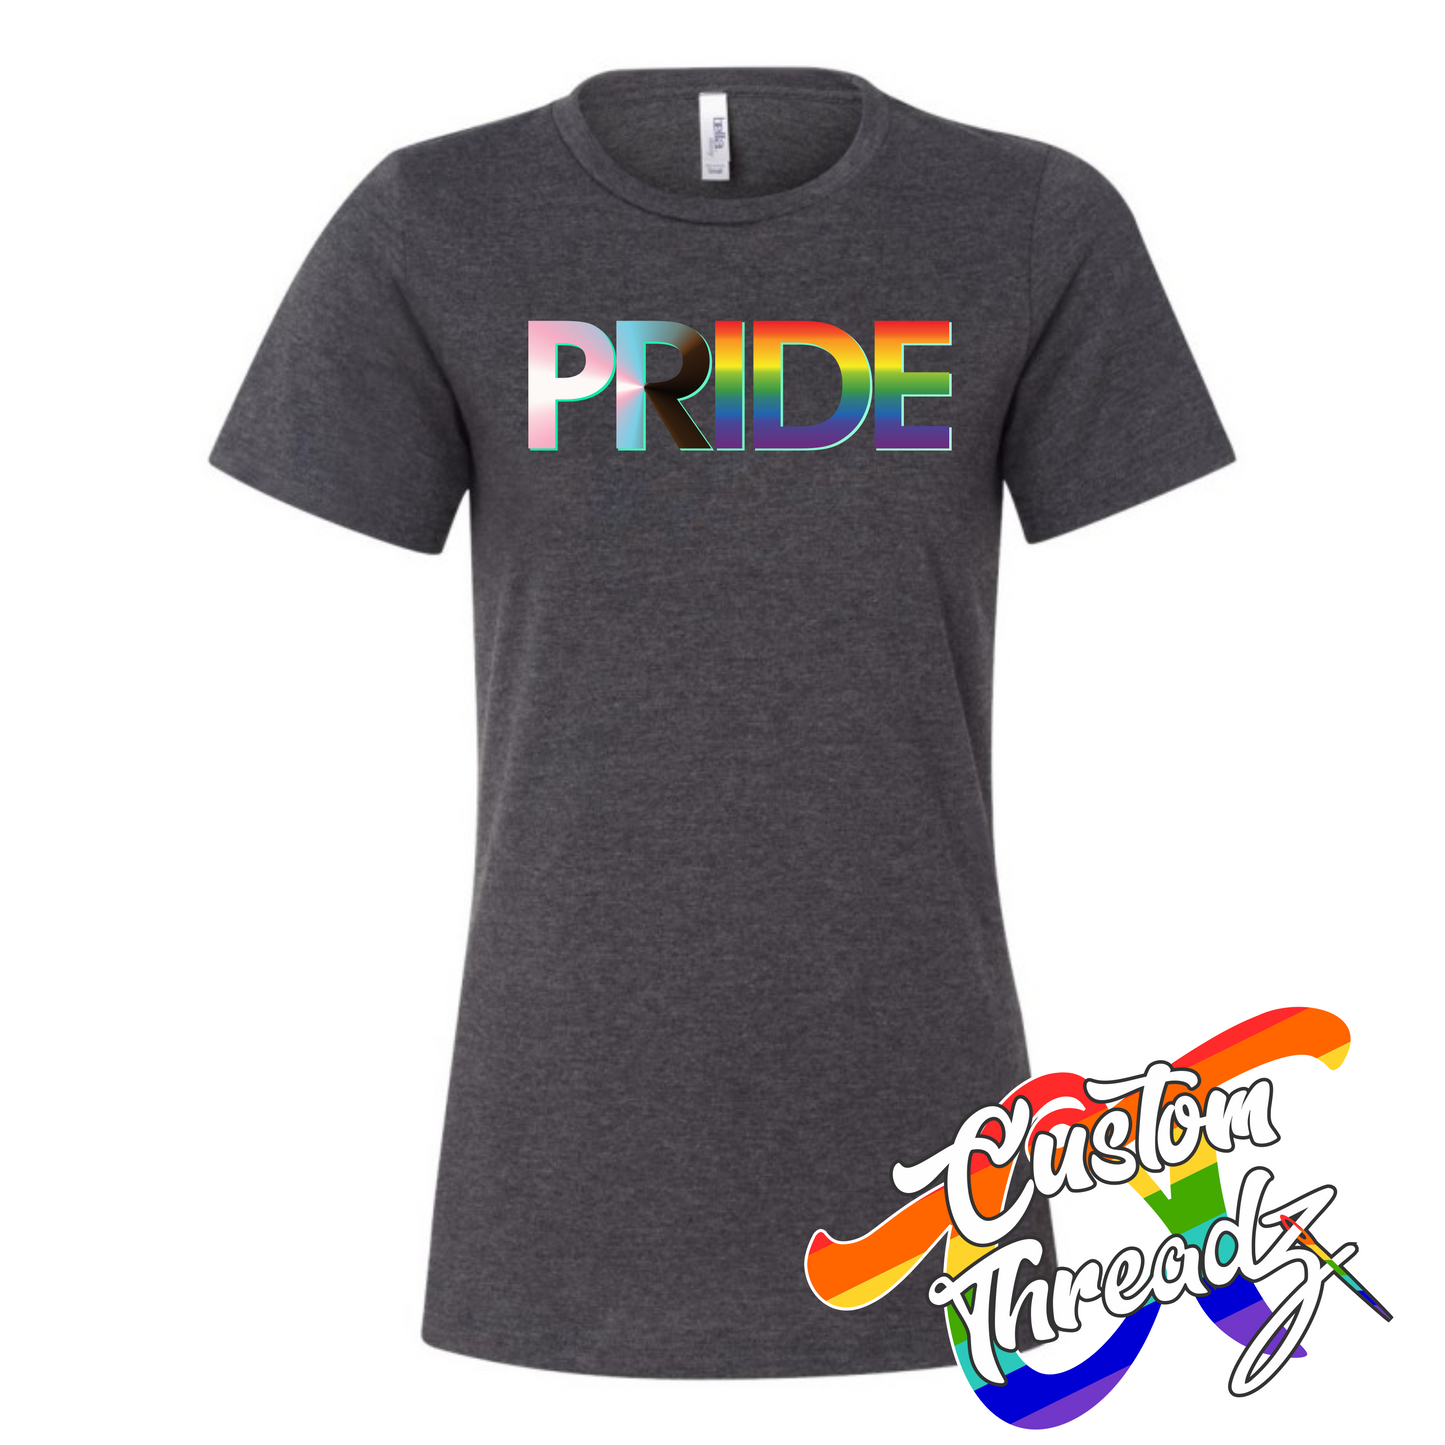 dark grey heather womens tee with progress pride flag rainbow DTG printed design